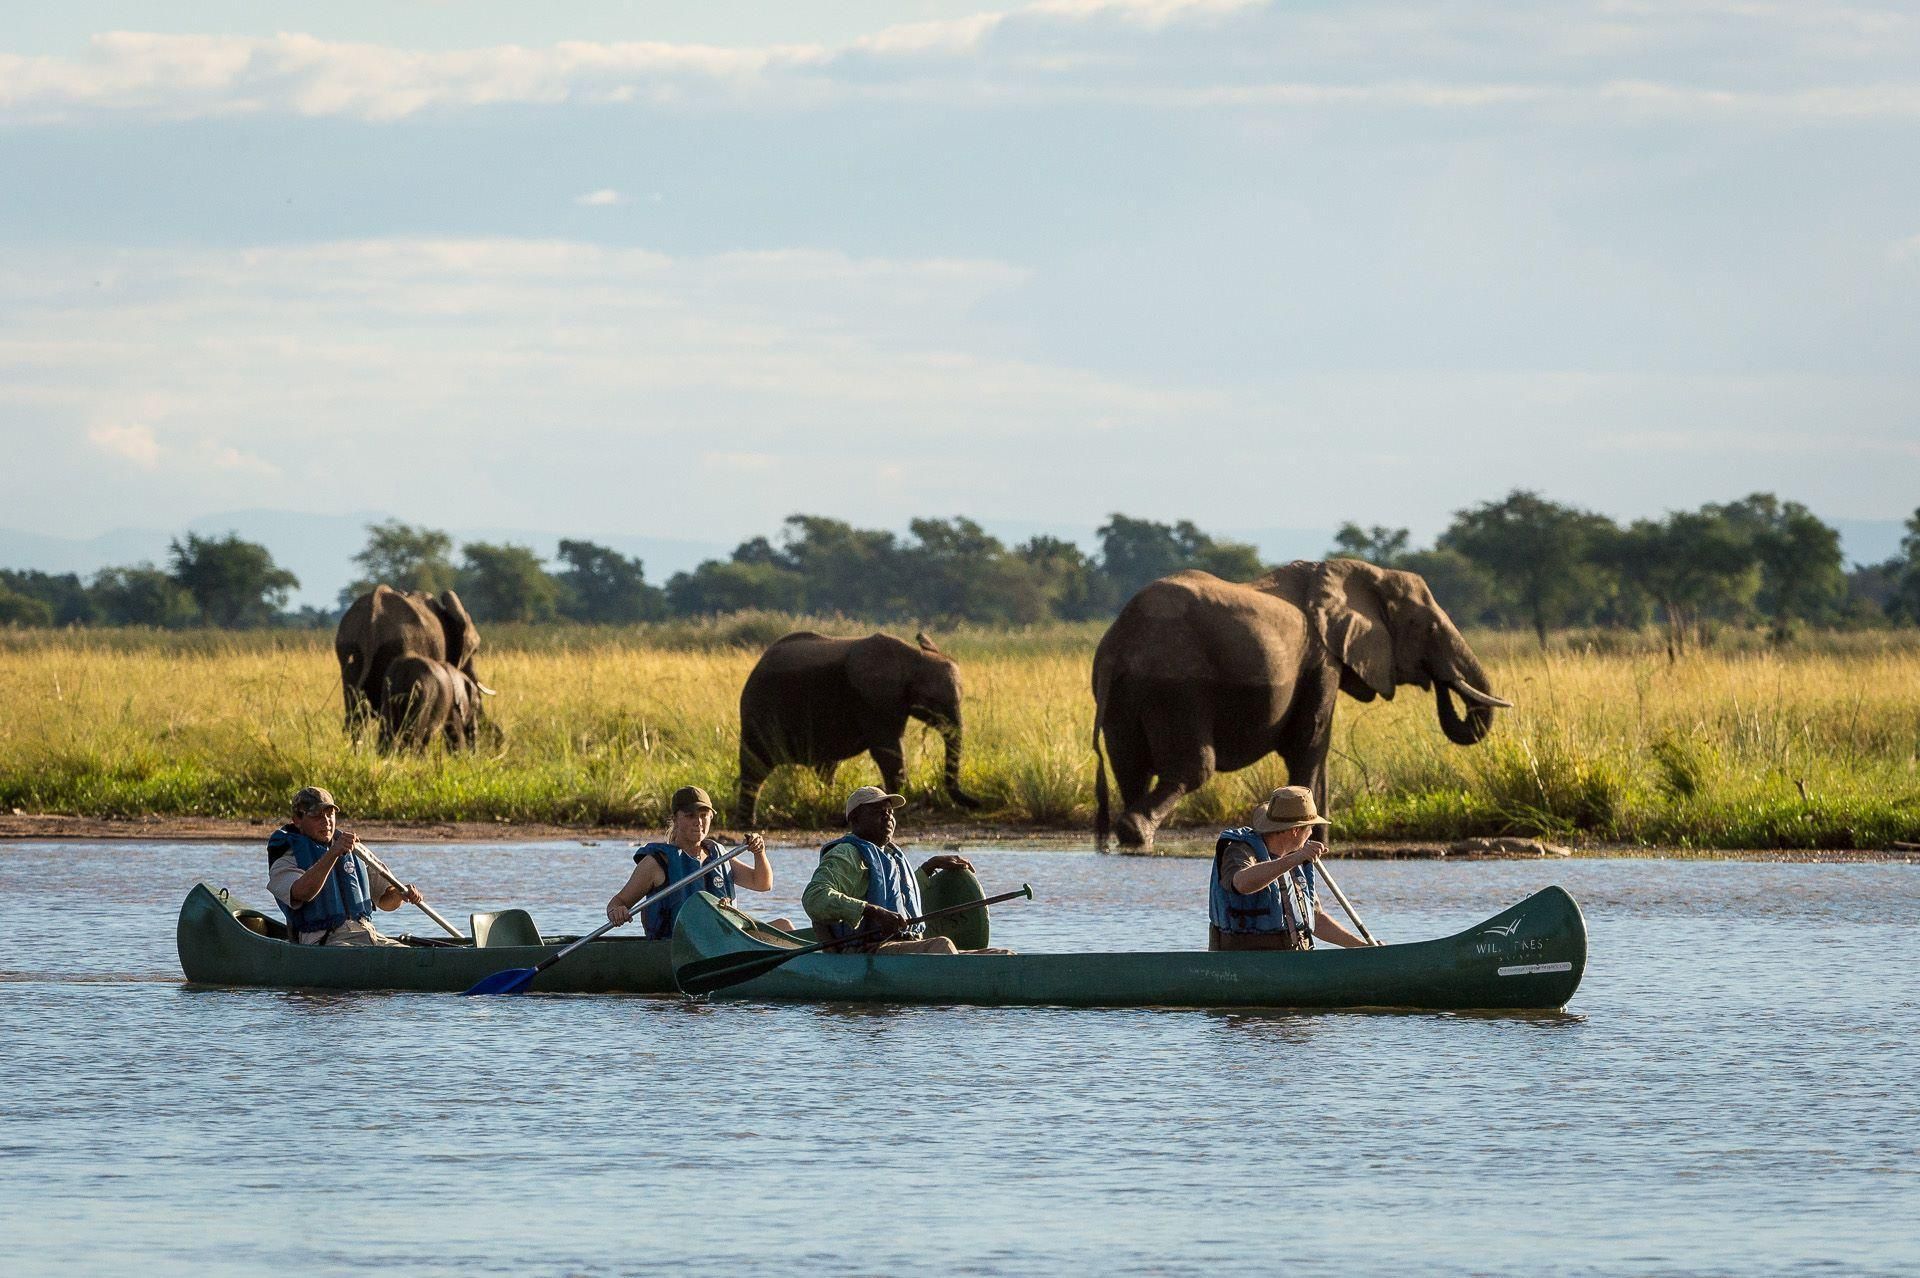 Safari by boat: Canoeing in Ruckomechi next to elephants